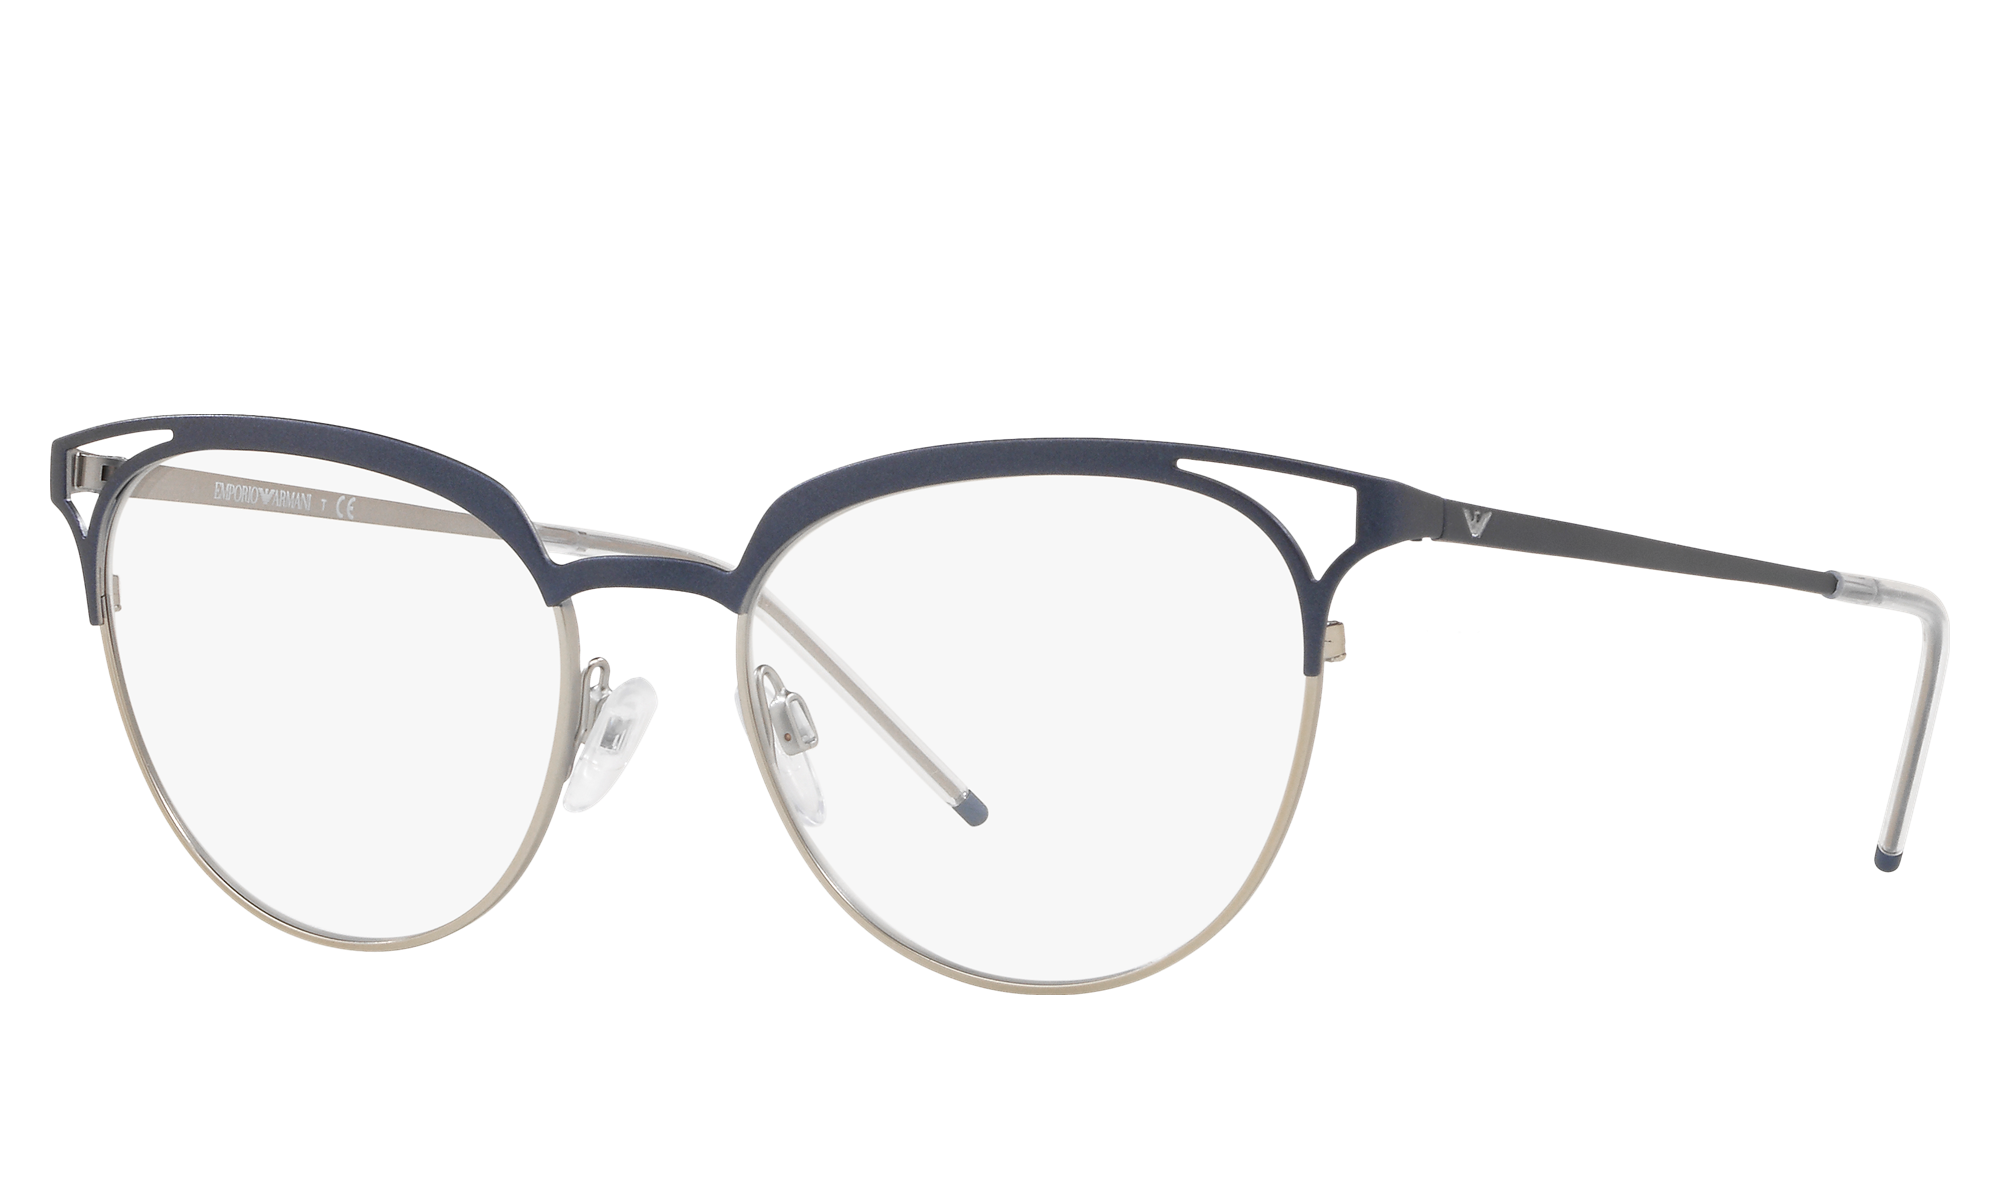 Emporio Armani EA1082 Matte Blue/Matte Silver Eyeglasses | Glasses.com ...